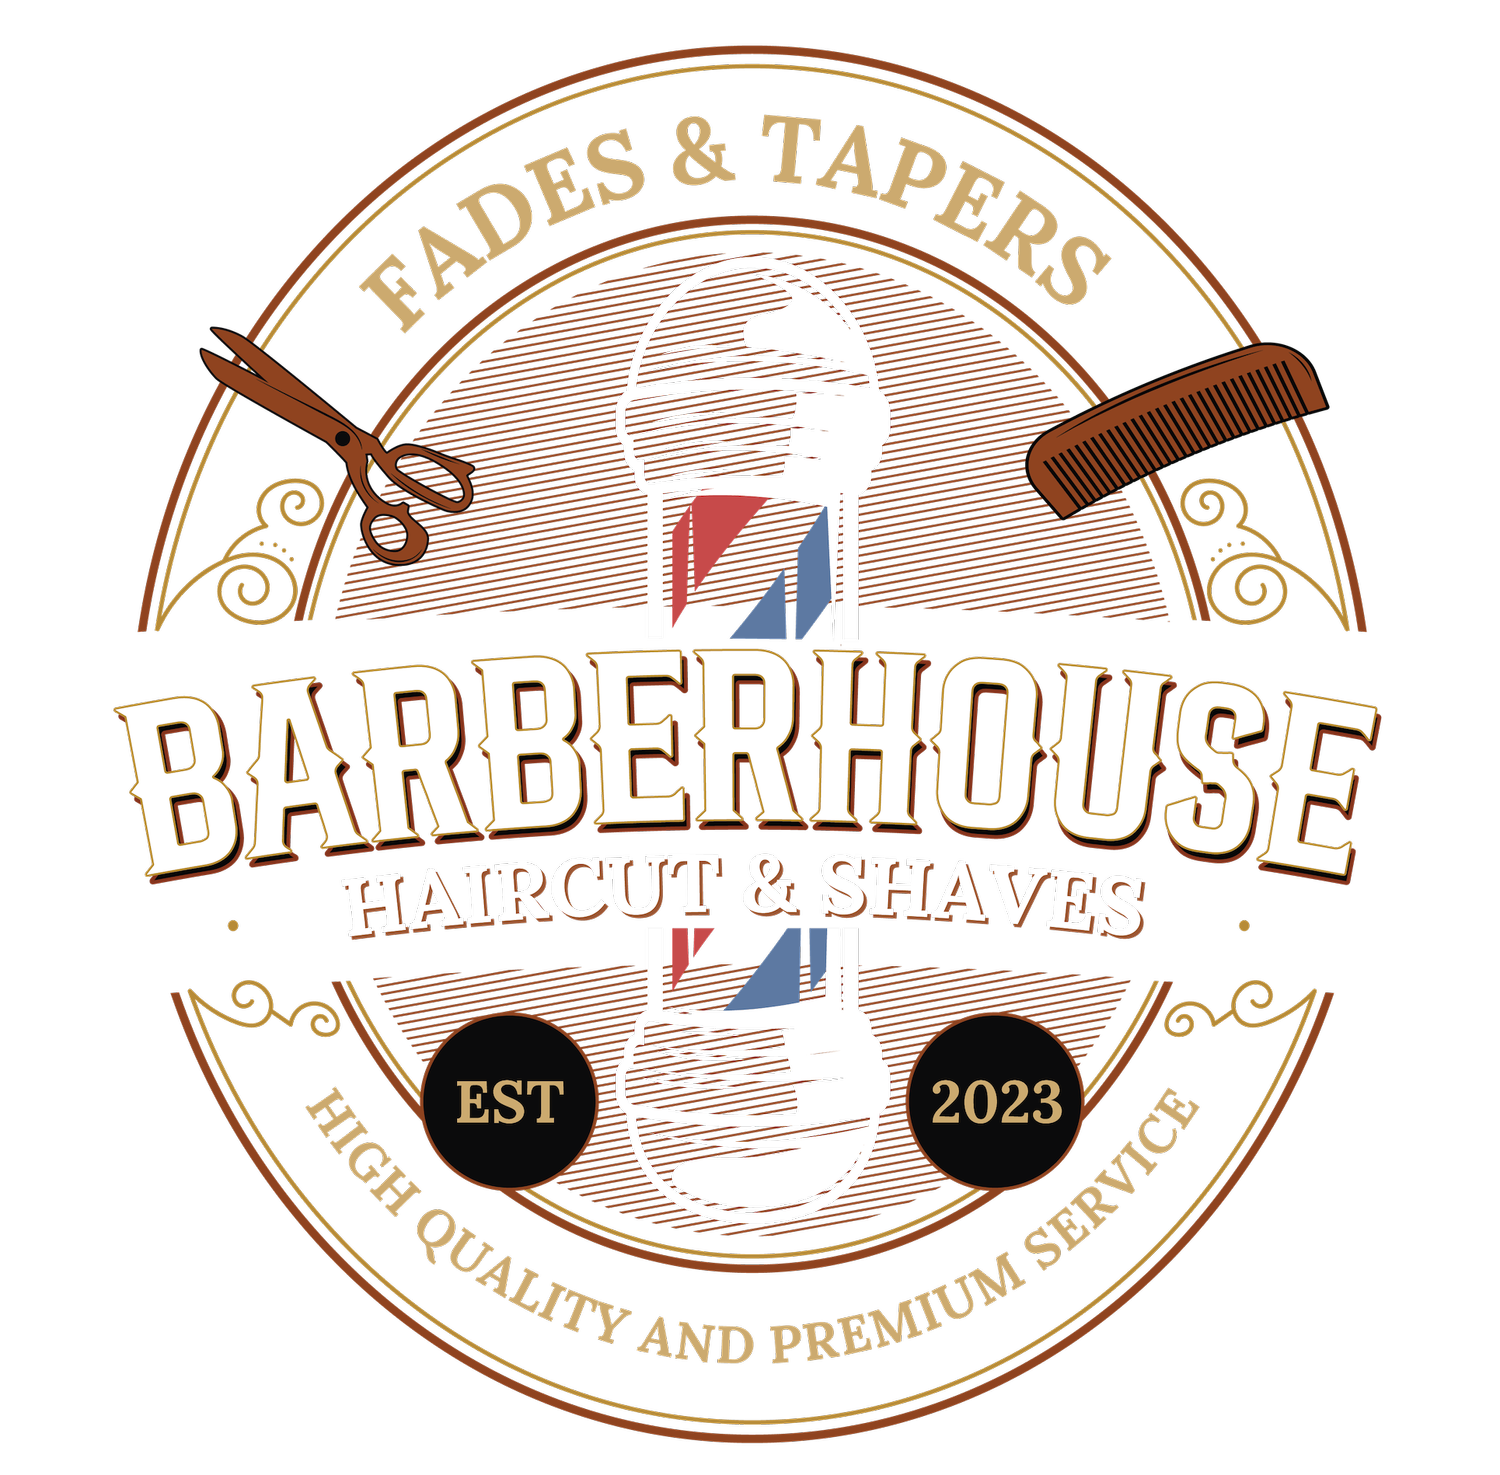 BARBERHOUSE Haircuts & Shaves